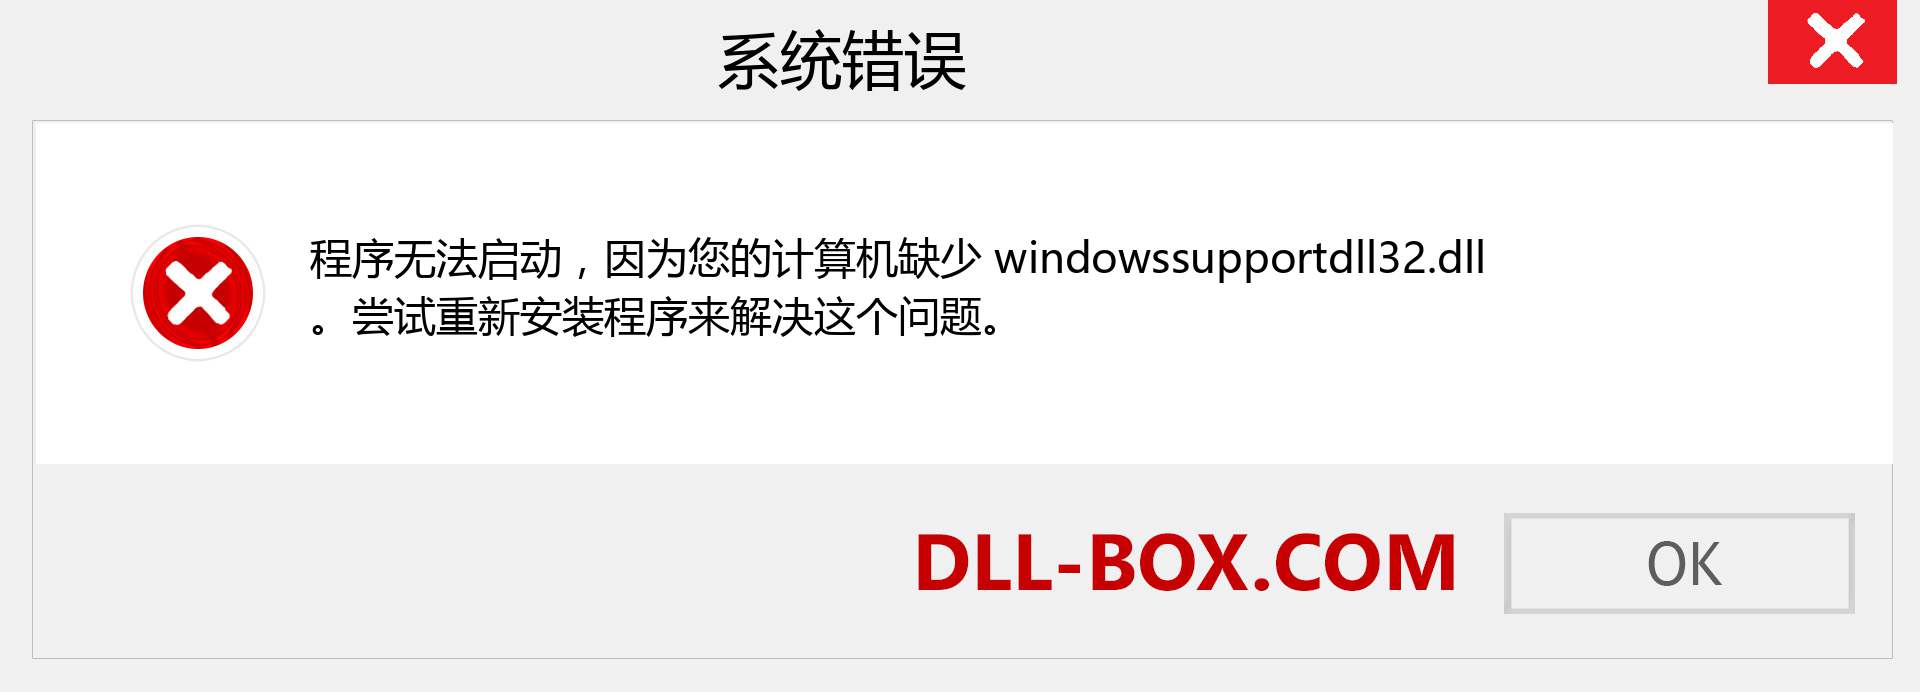 windowssupportdll32.dll 文件丢失？。 适用于 Windows 7、8、10 的下载 - 修复 Windows、照片、图像上的 windowssupportdll32 dll 丢失错误